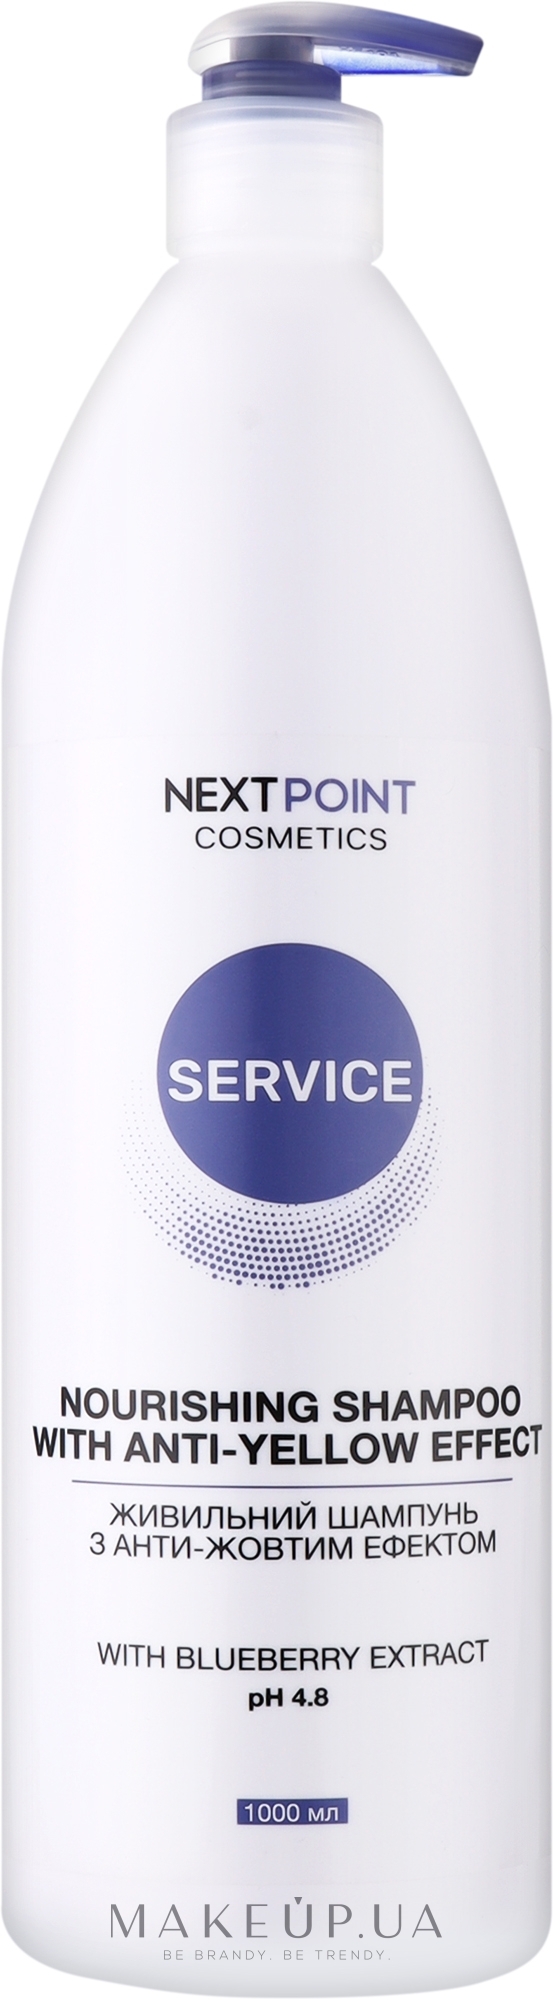 Шампунь питательный с анти-желтым эффектом - Nextpoint Cosmetics Service Nourishing Shampoo With Anti-Yellow Effect — фото 1000ml